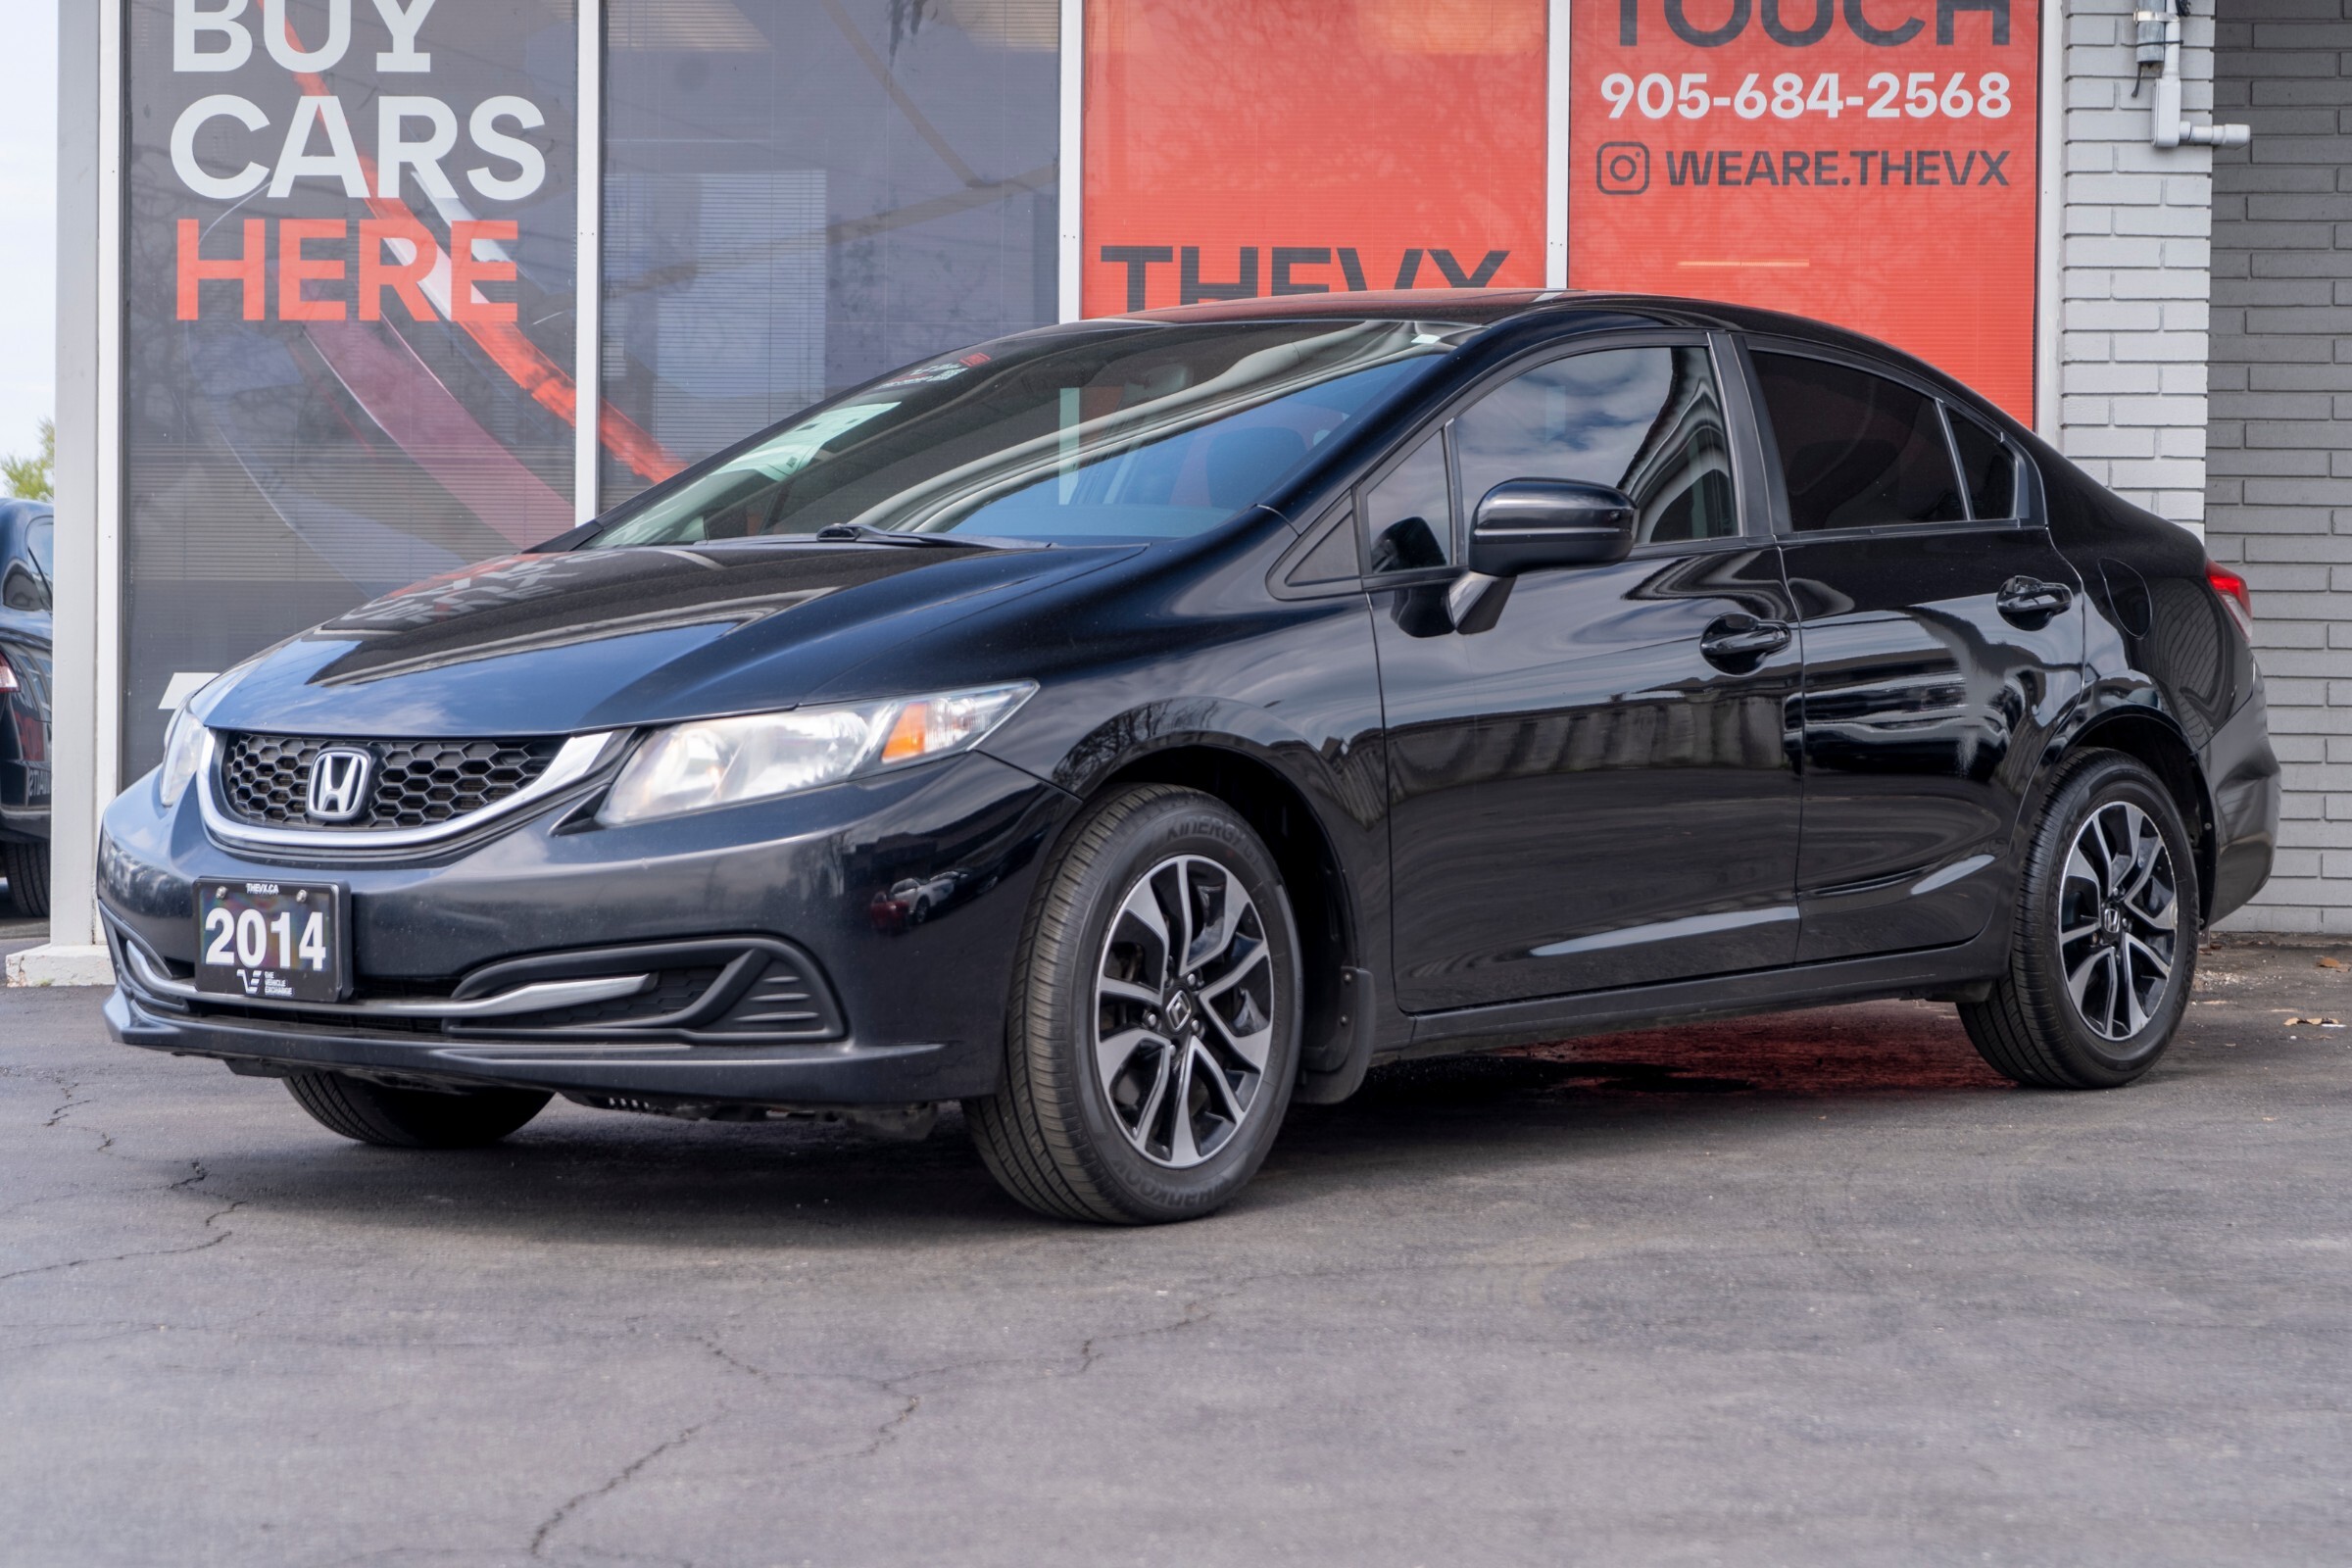 2014 Honda Civic EX| CVT| Sunroof| Alloy Rims| Bluetooth| HTD Seats